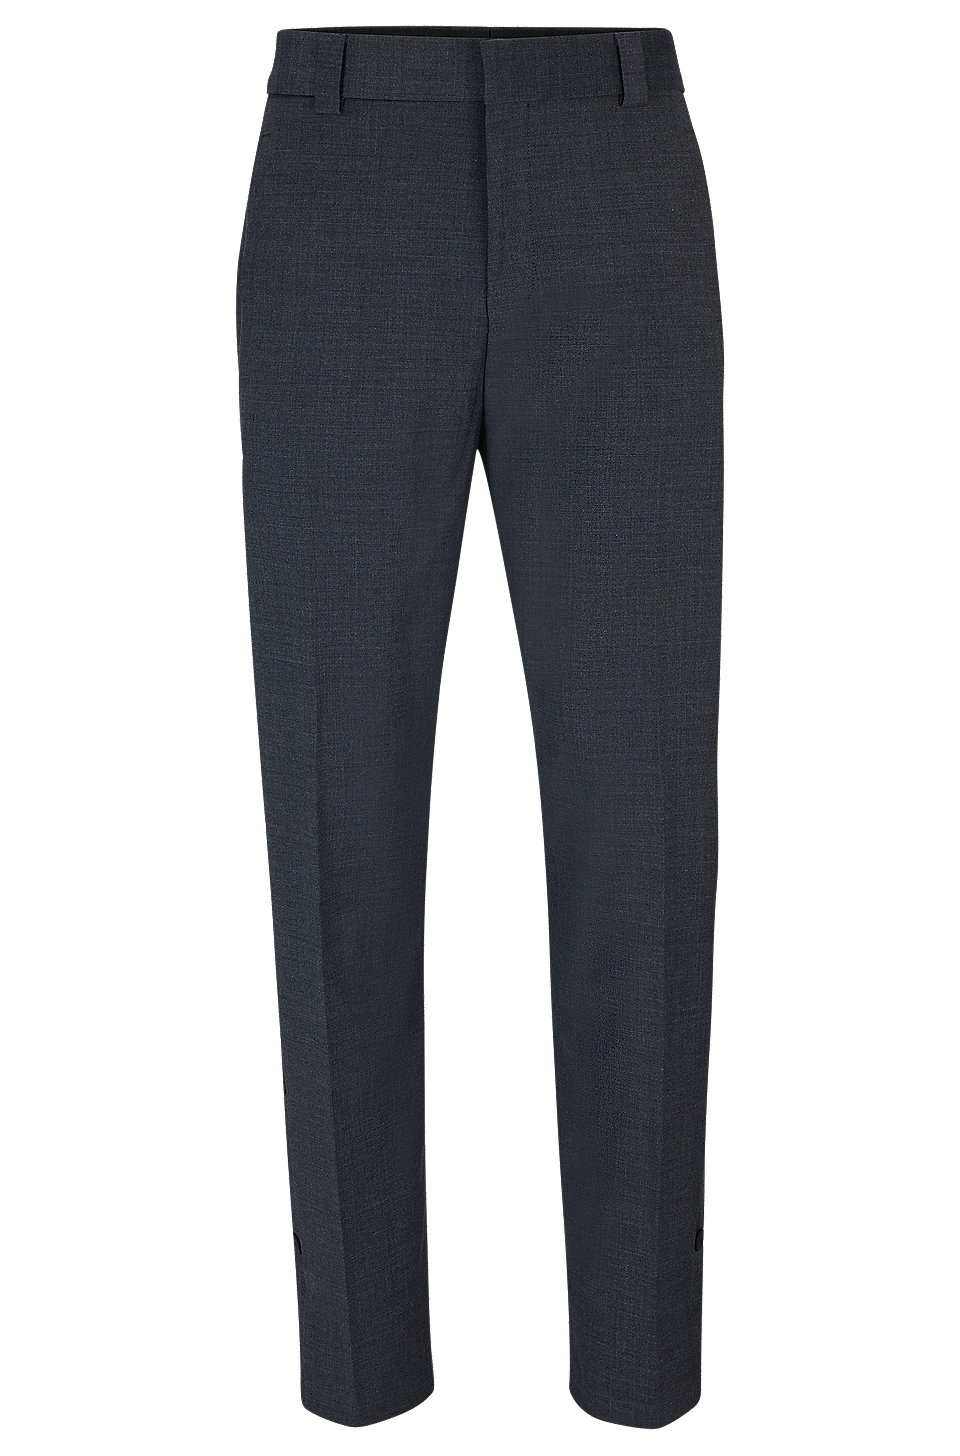 HUGO - Slim-fit trousers with press-stud side seams